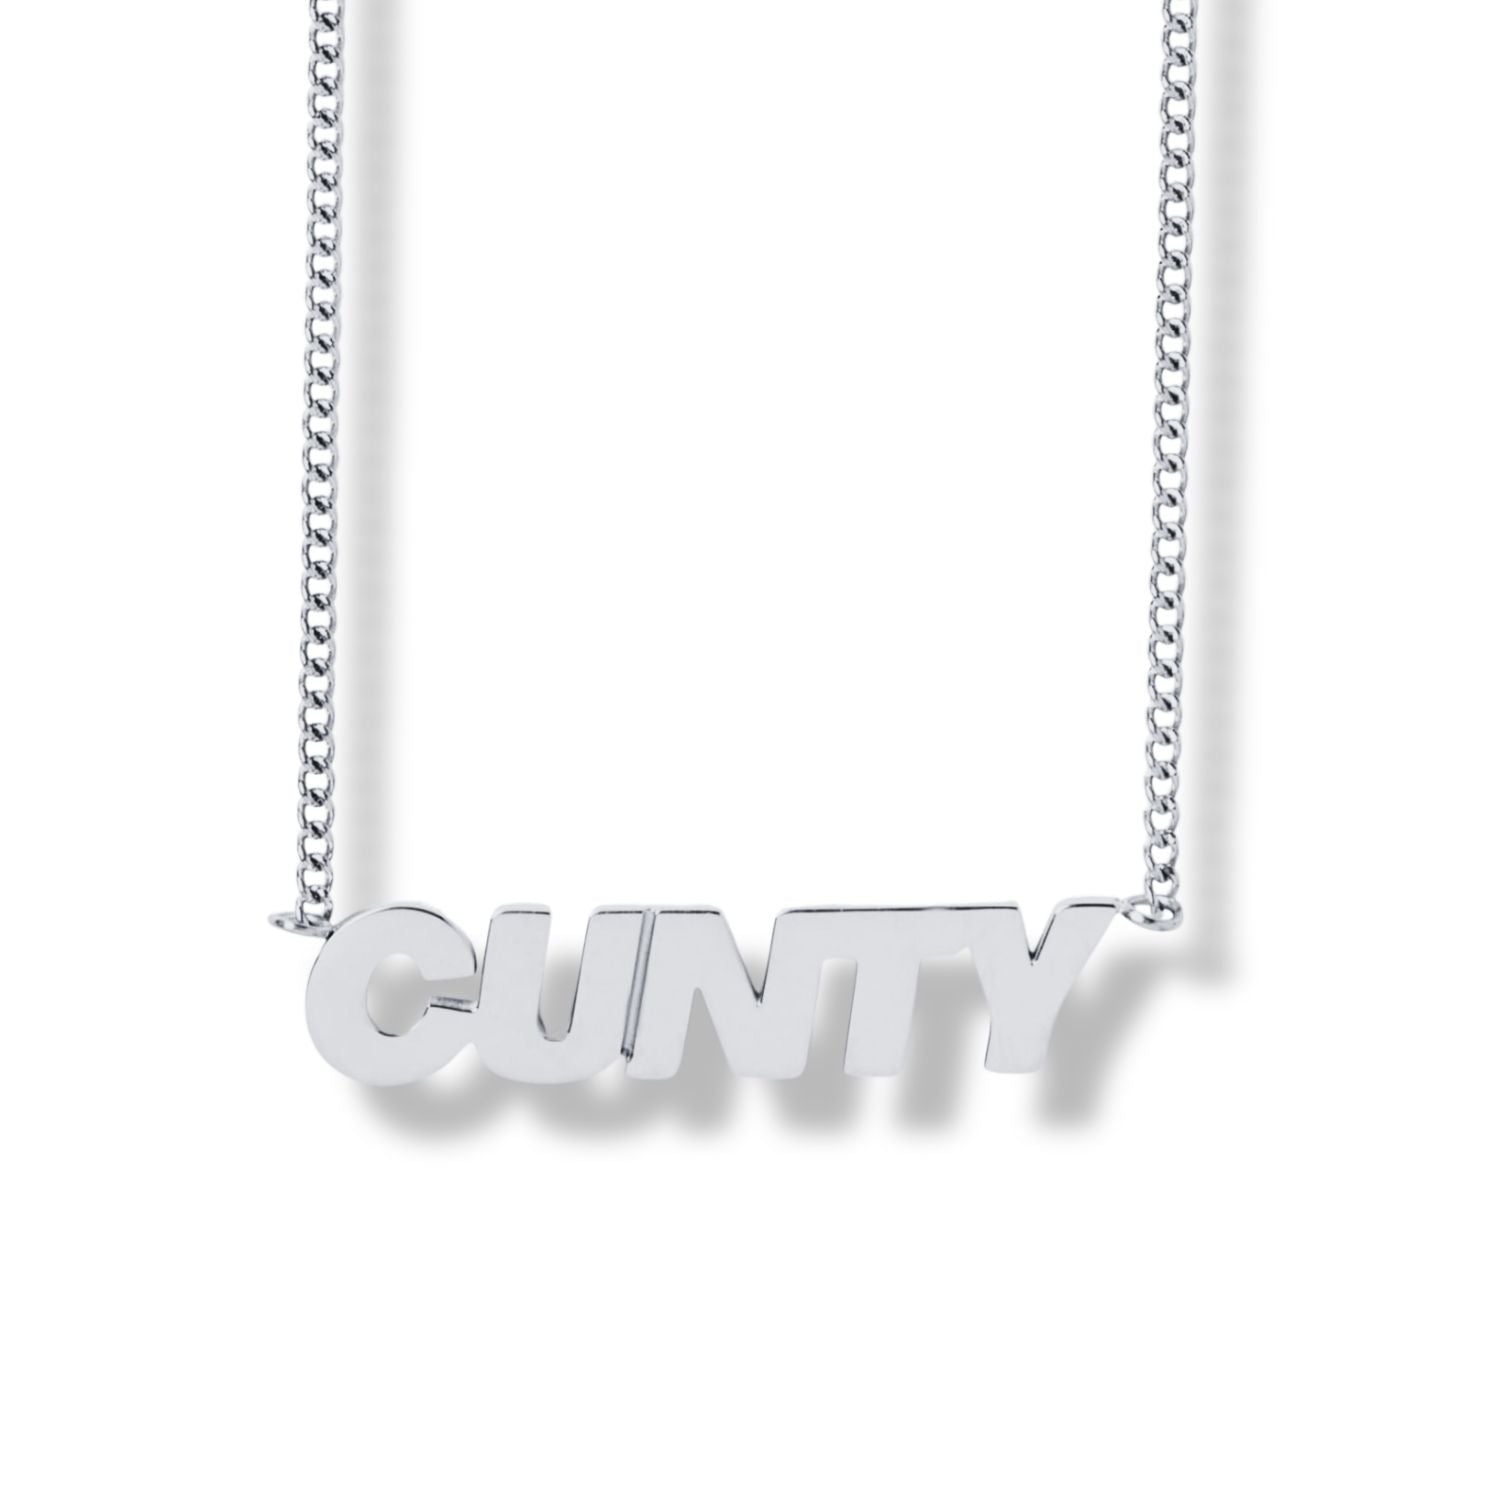 'CUNTY' Chain